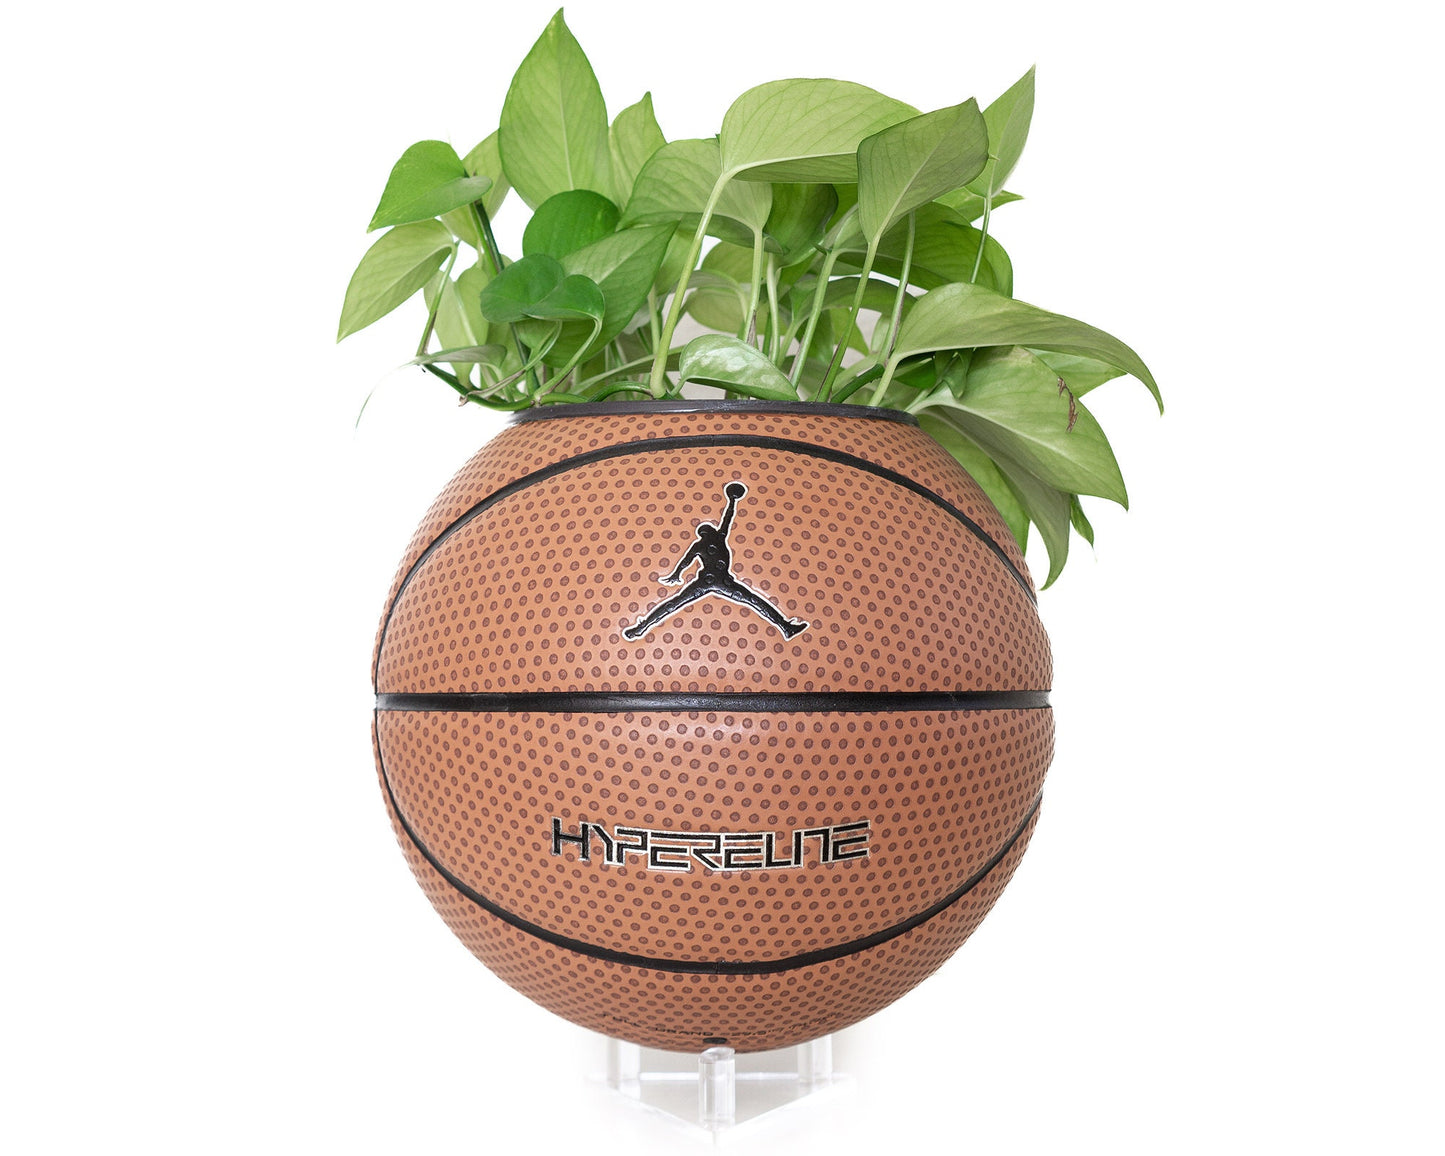 plntrs - Jordan Legacy Hyperelite Basketball Planter FULL SIZE - new ball with stand